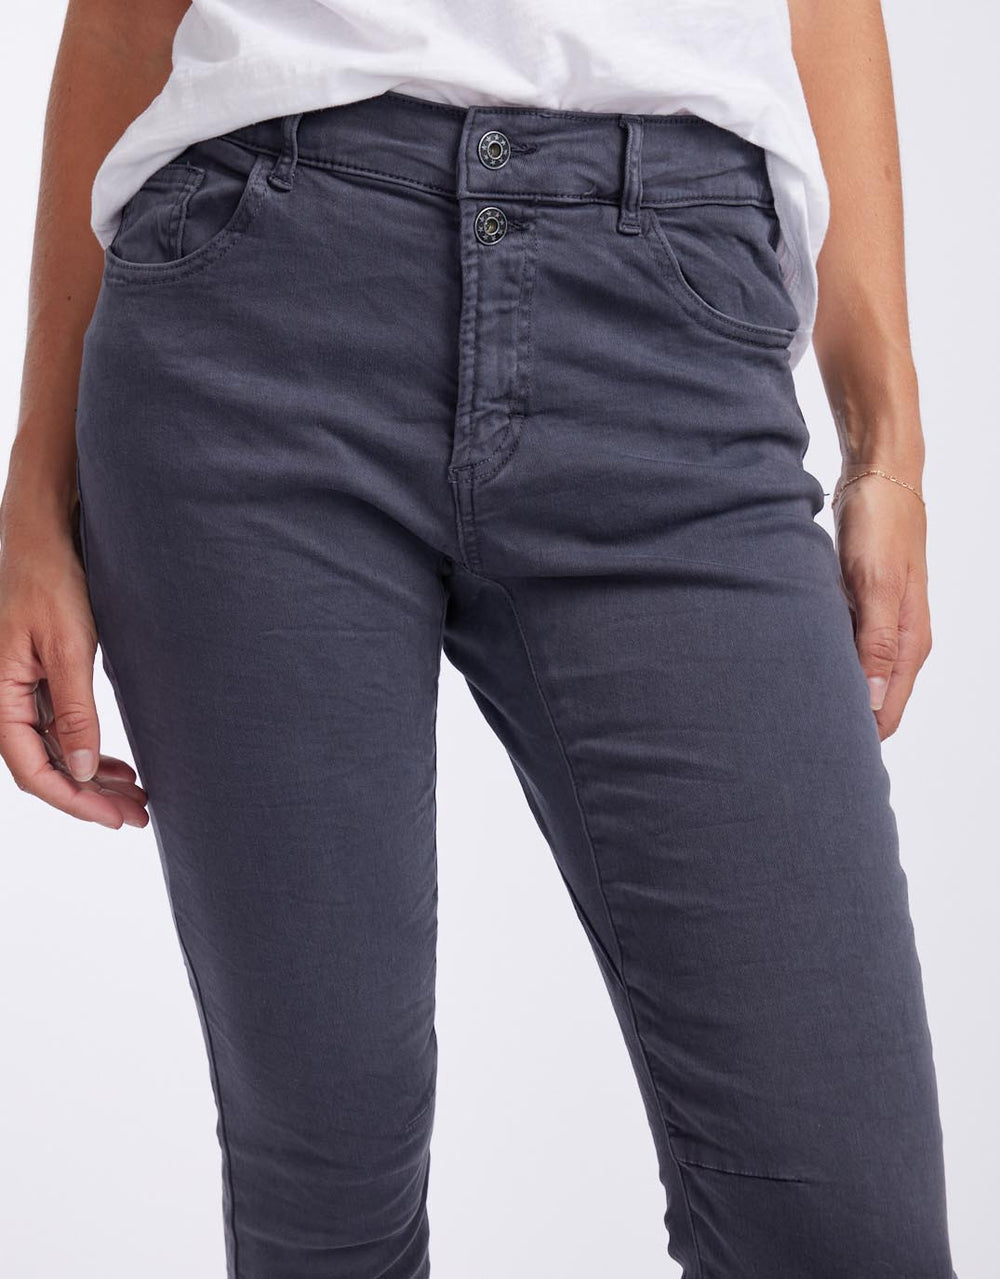     italian-star-emma-jeans-coal-womens-clothing